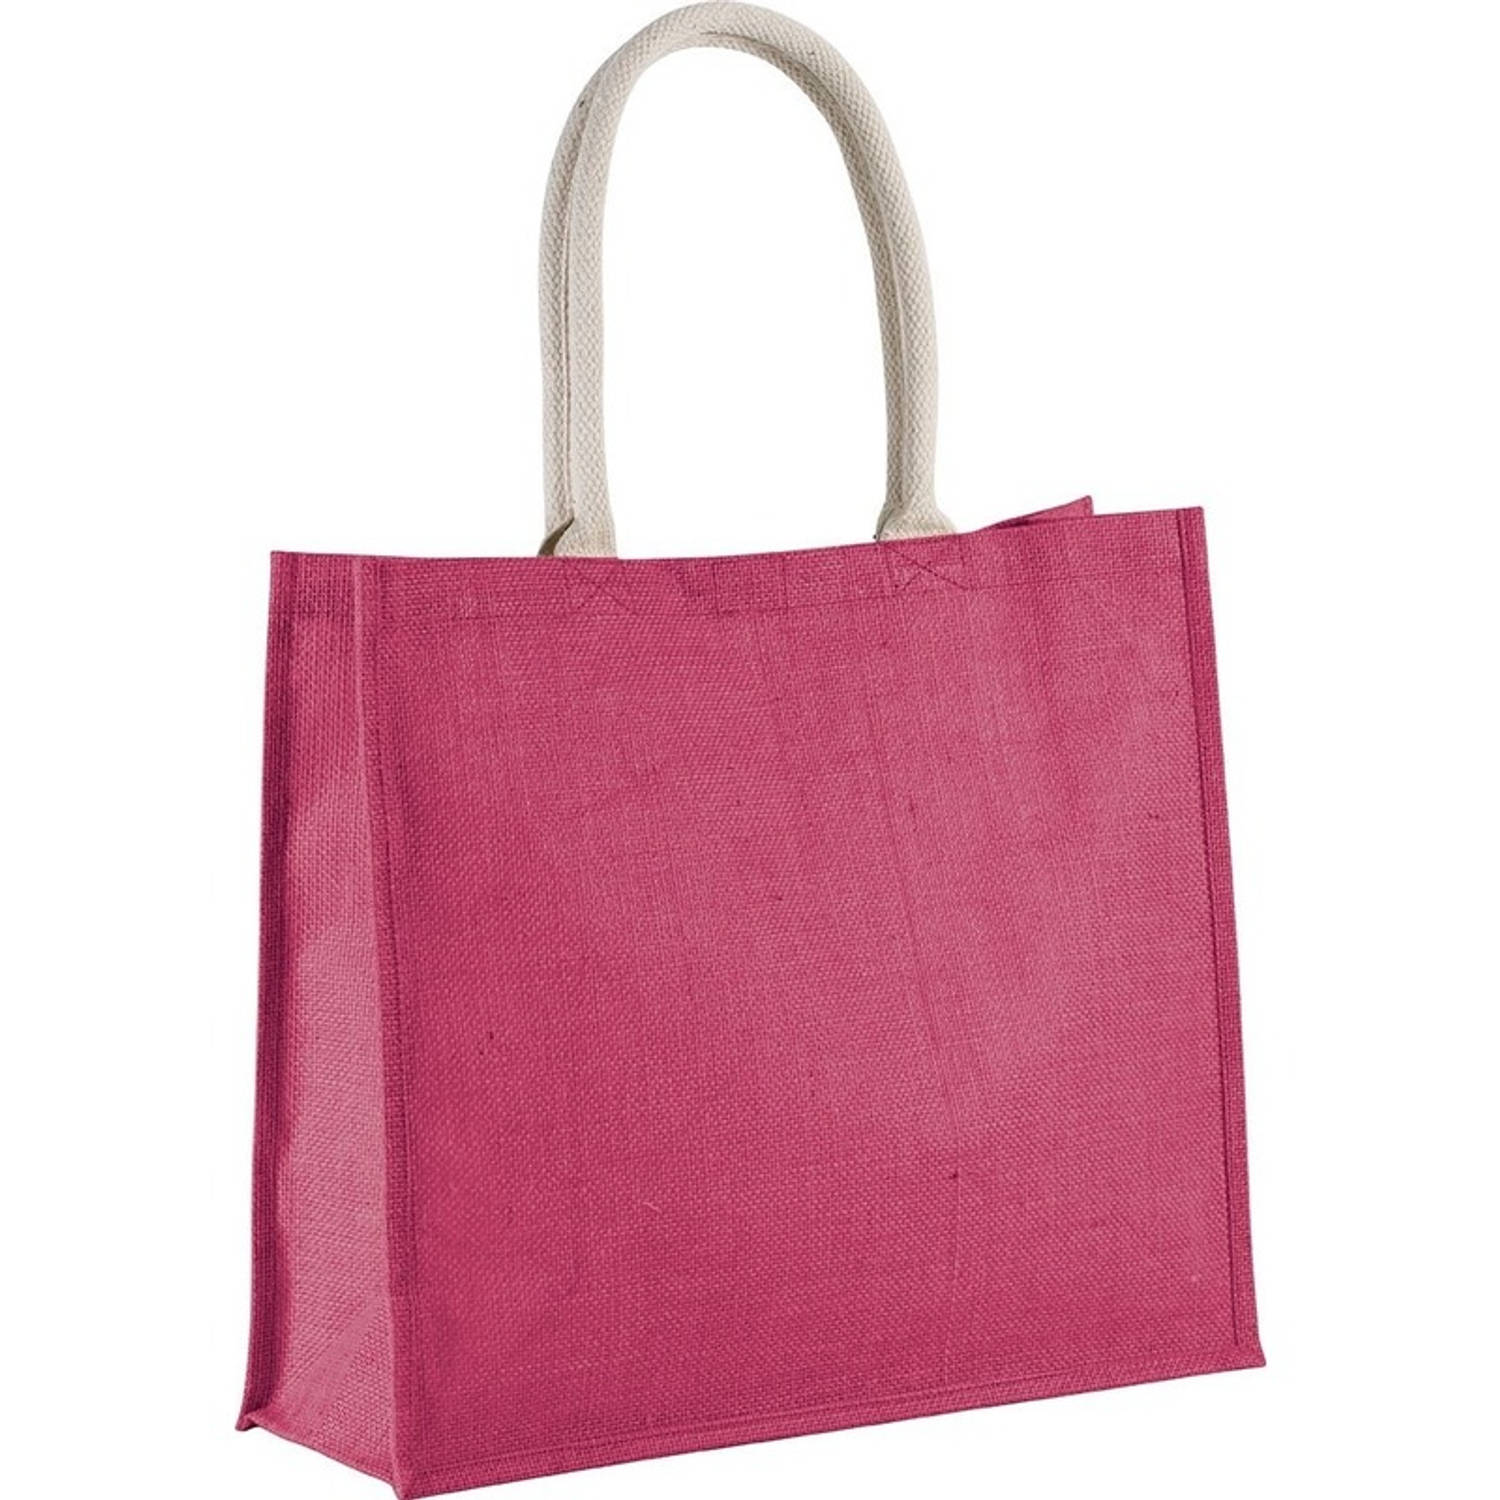 Fuchsia roze jute shopper/boodschappentas 42 cm - Boodschappentassen